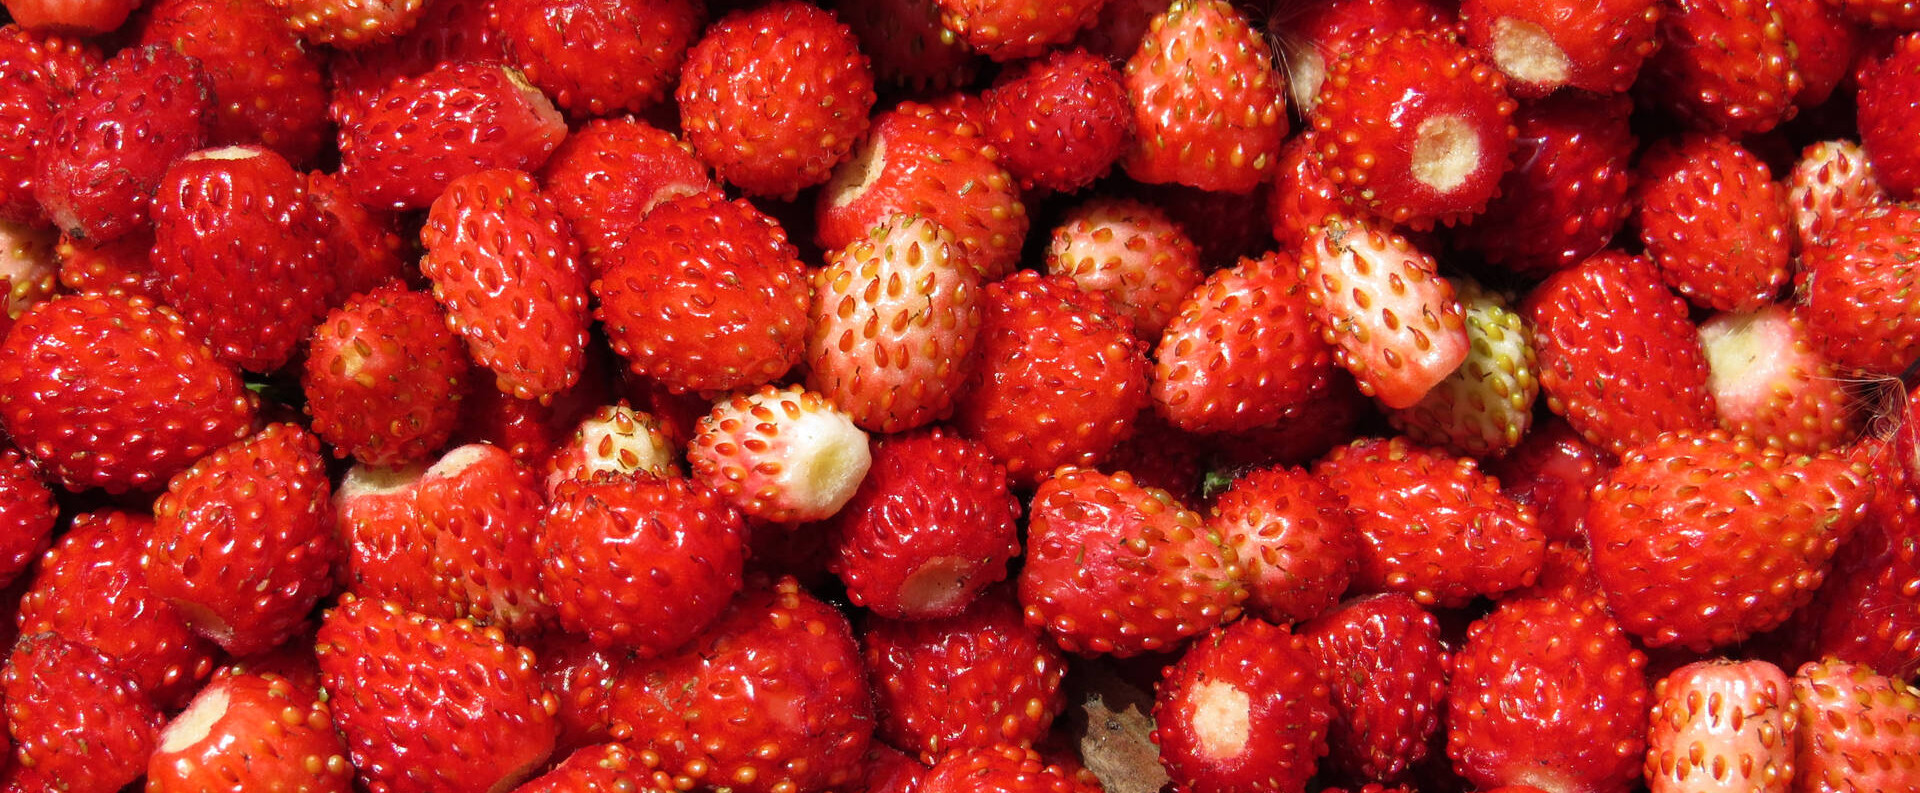 Berries Strawberries Background Strawberry Wallpaper Desktop 28995